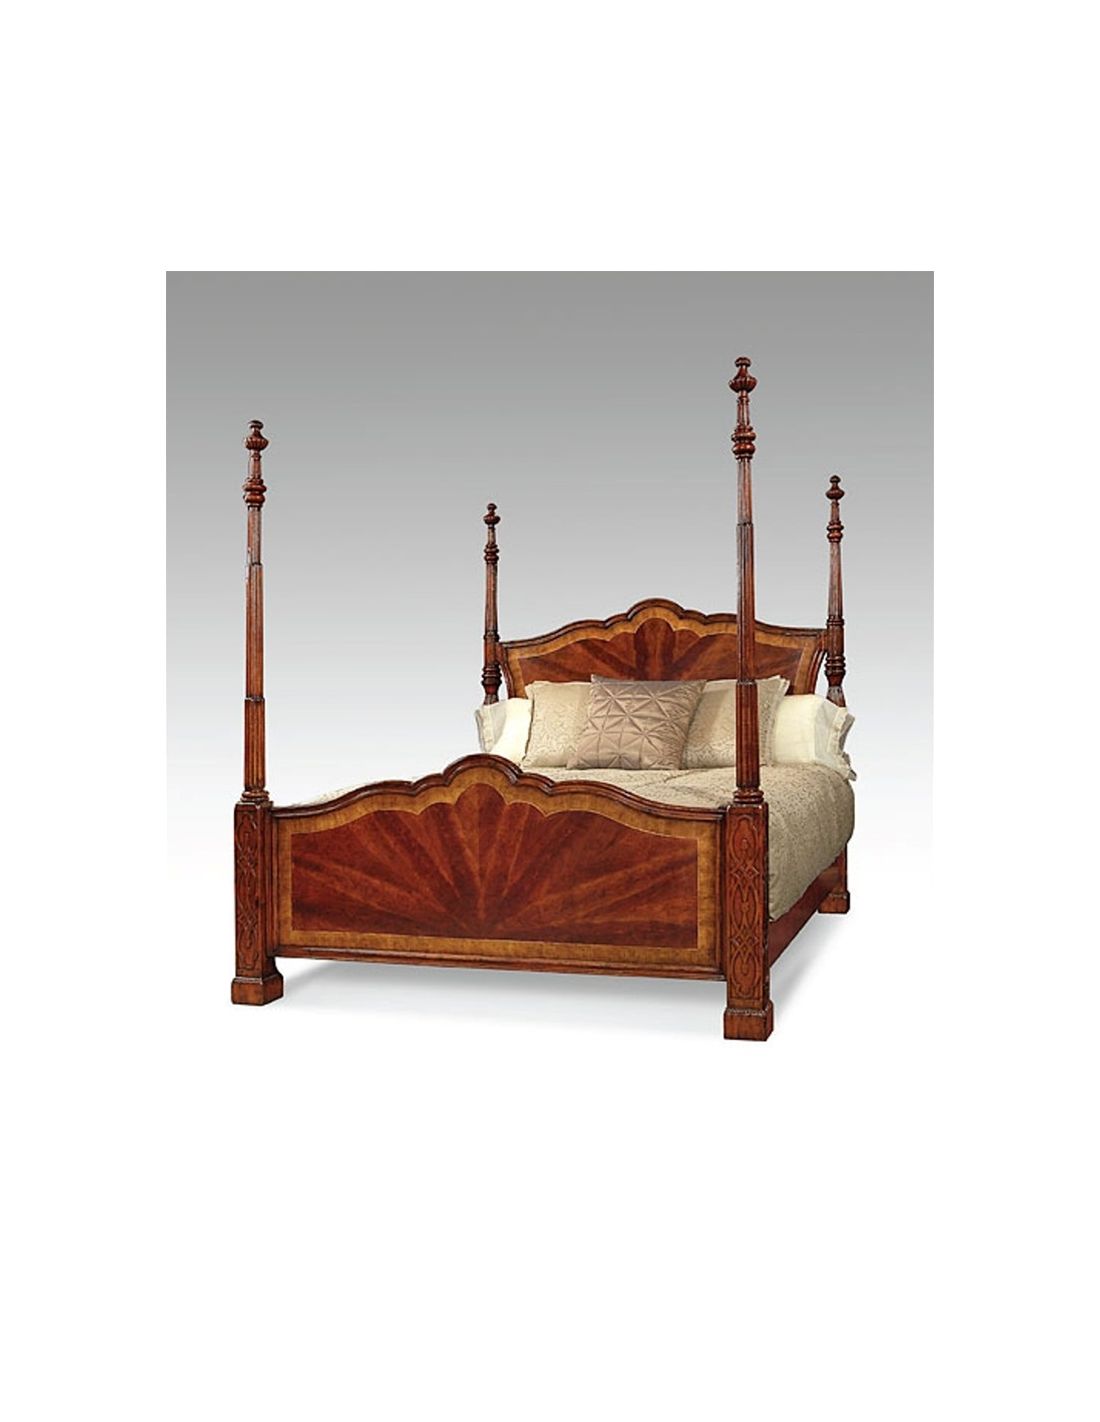 Four Post Bed King Bedroom Furniture, Four Post King Bed Frame